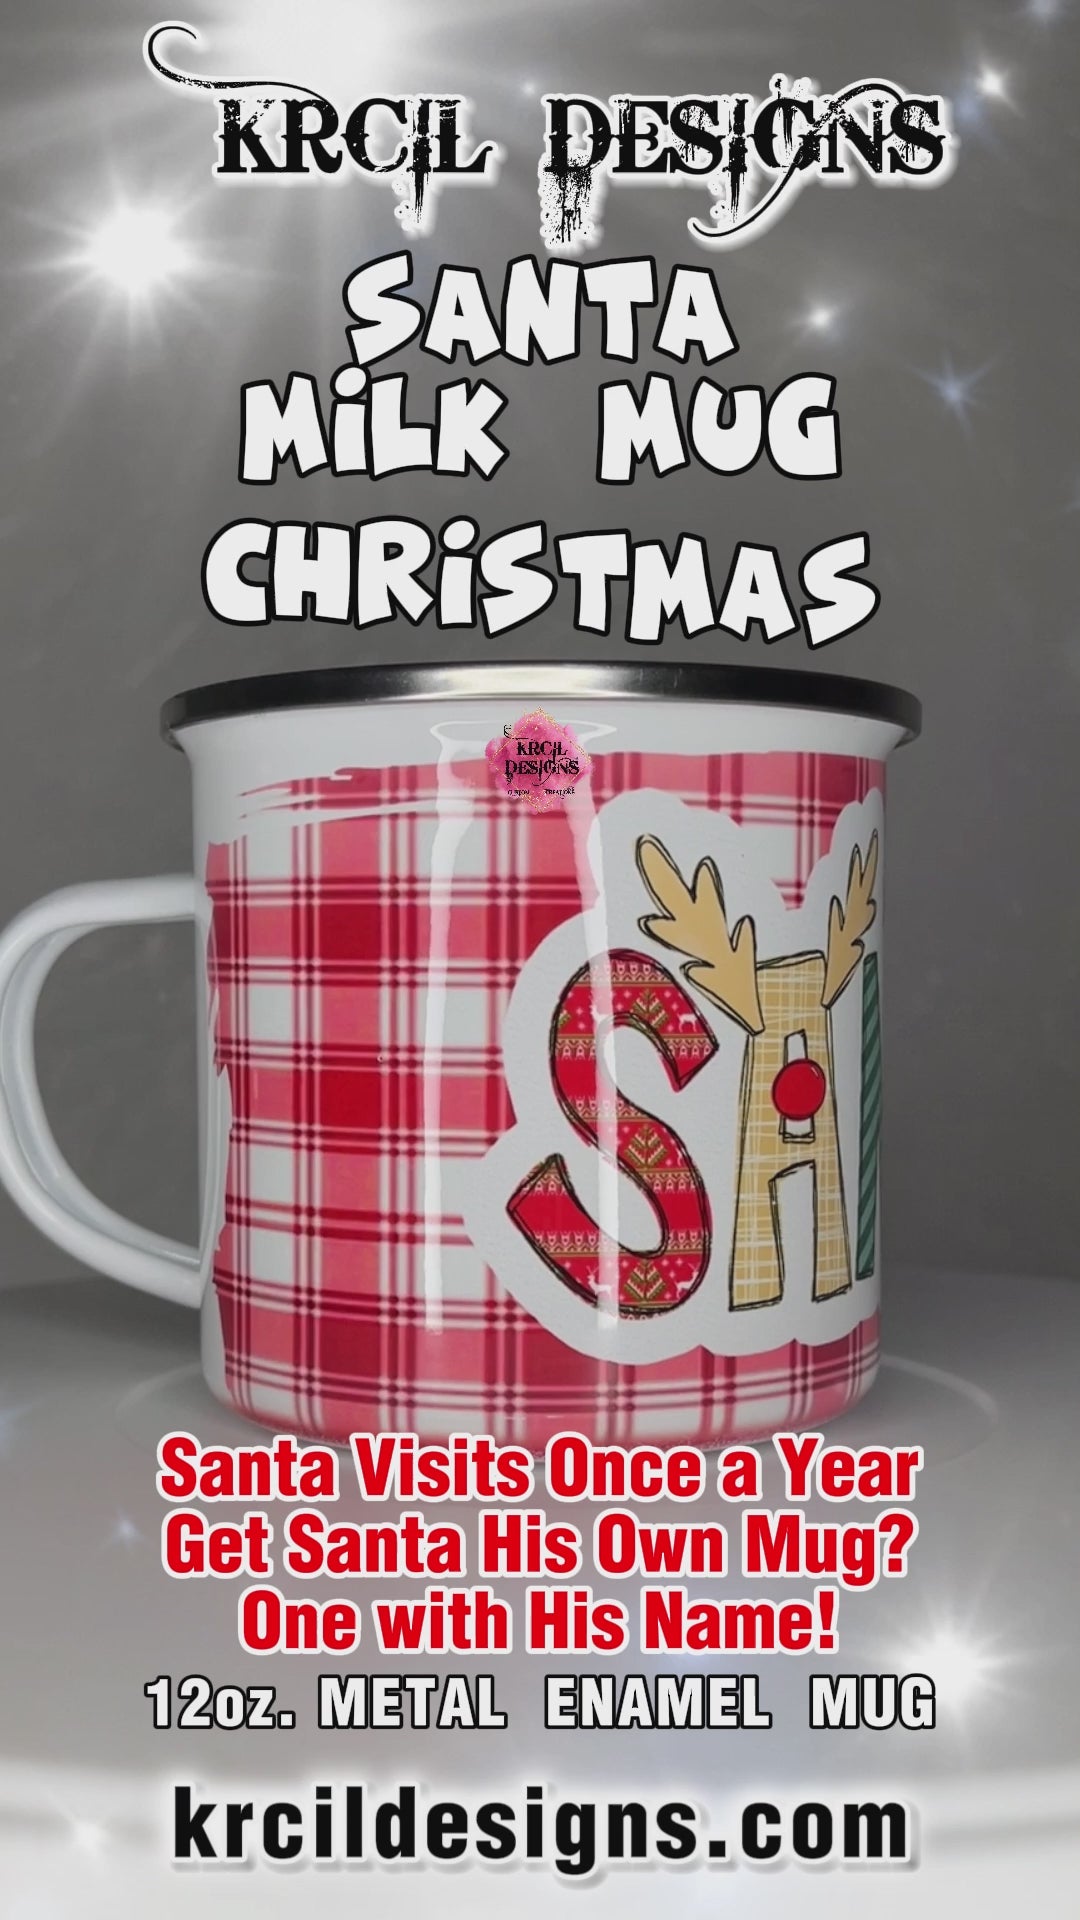 Santa Character Personalized Christmas Mug 11oz White